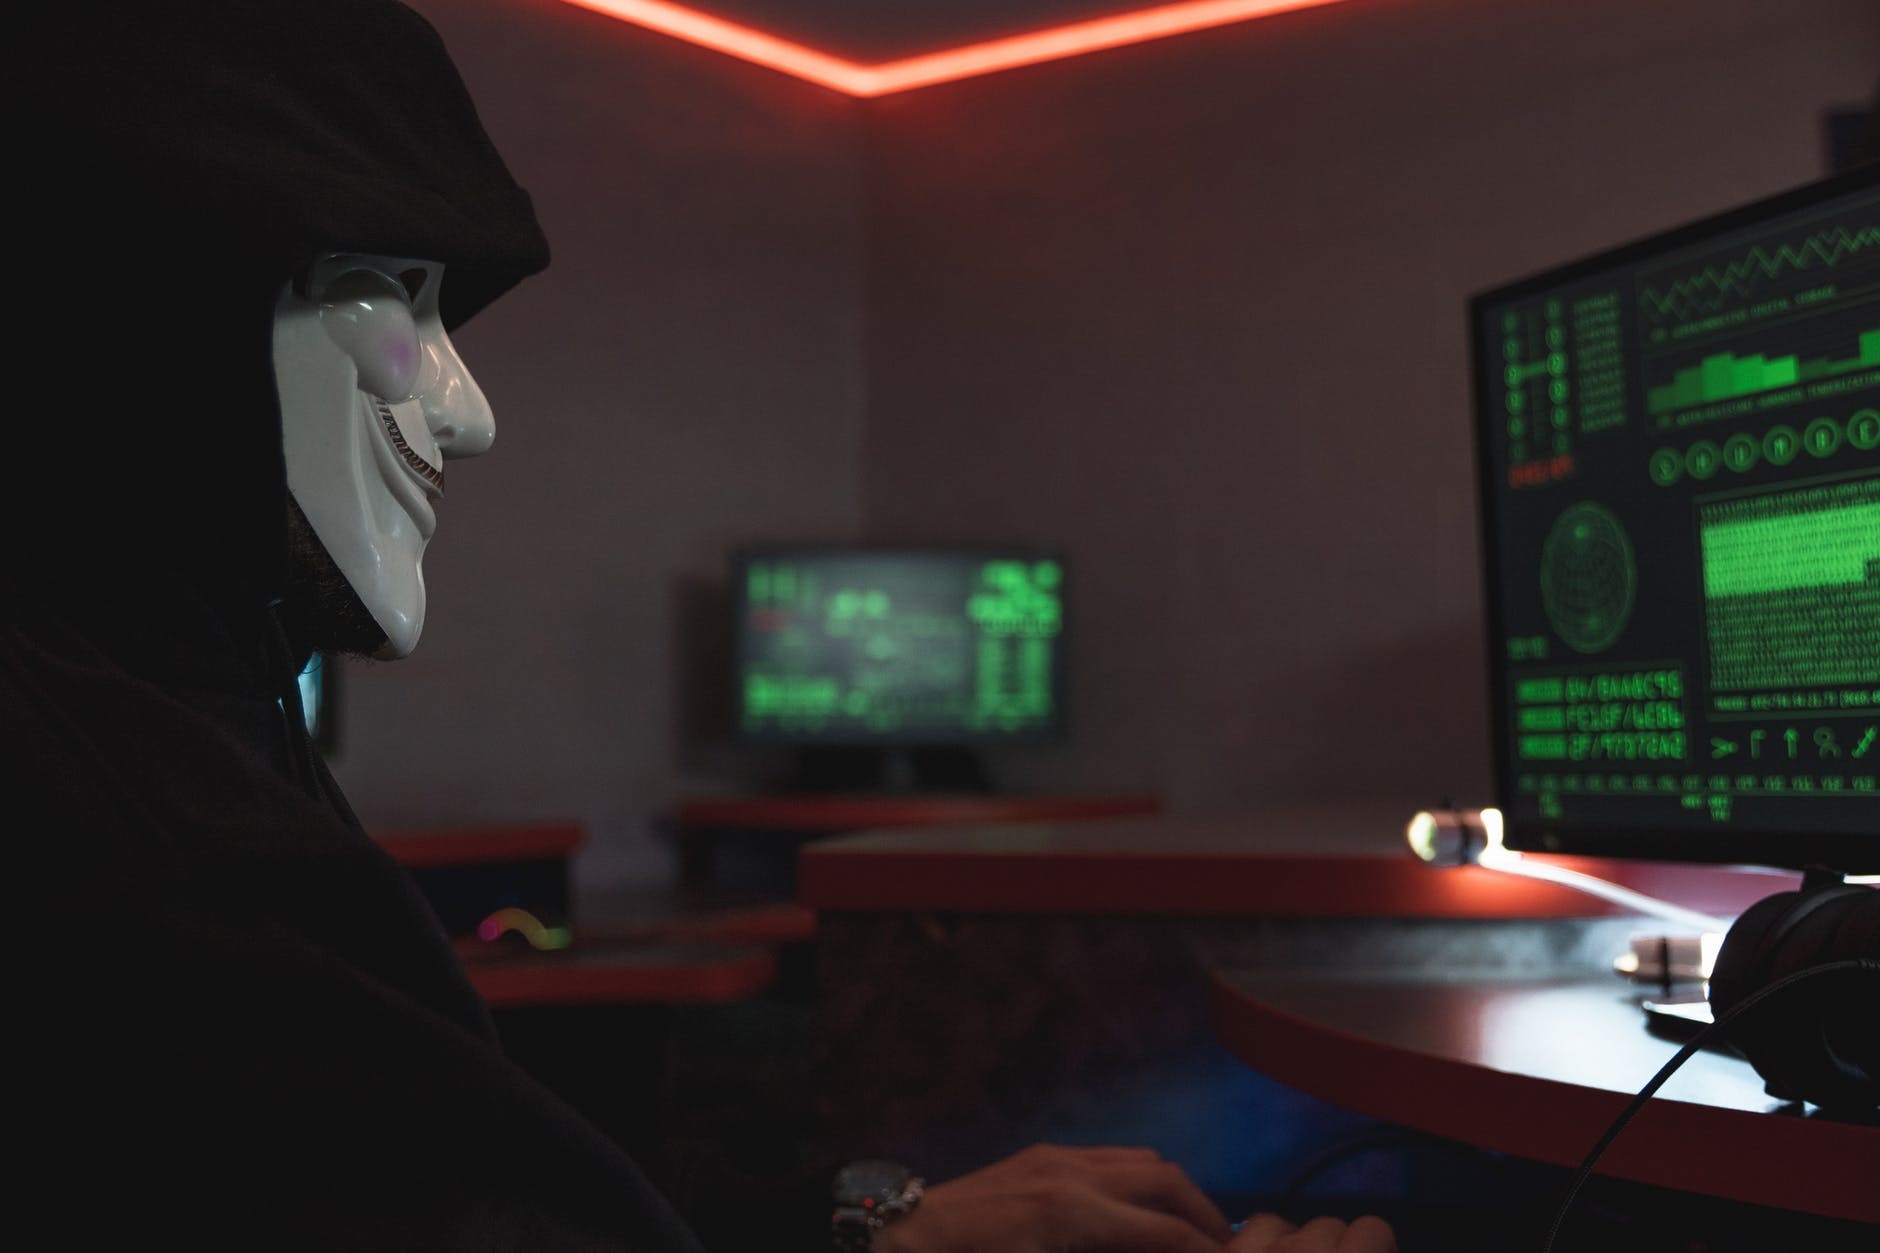 A cybercriminal hacking computer